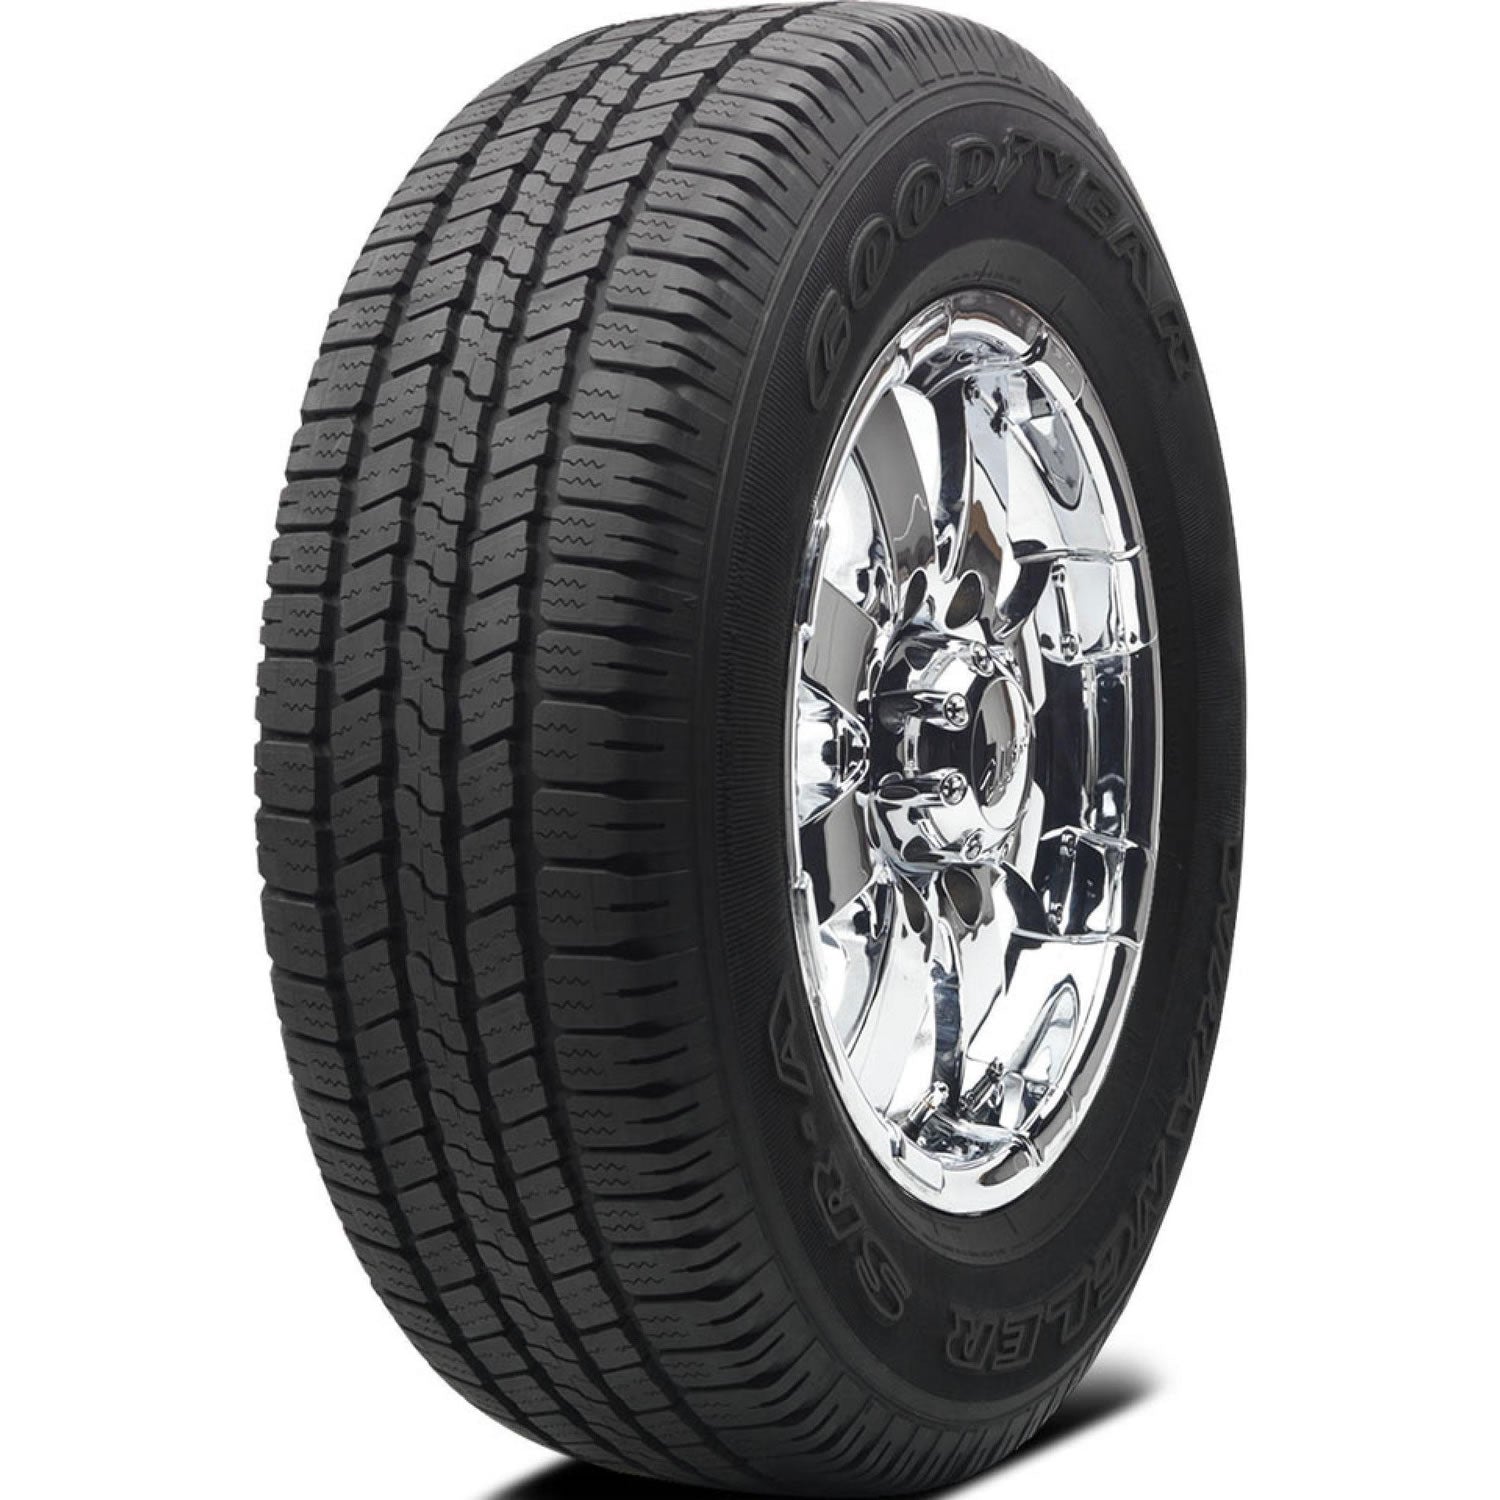 GOODYEAR WRANGLER SR-A P255/70R17 (31.1X10.2R 17) Tires